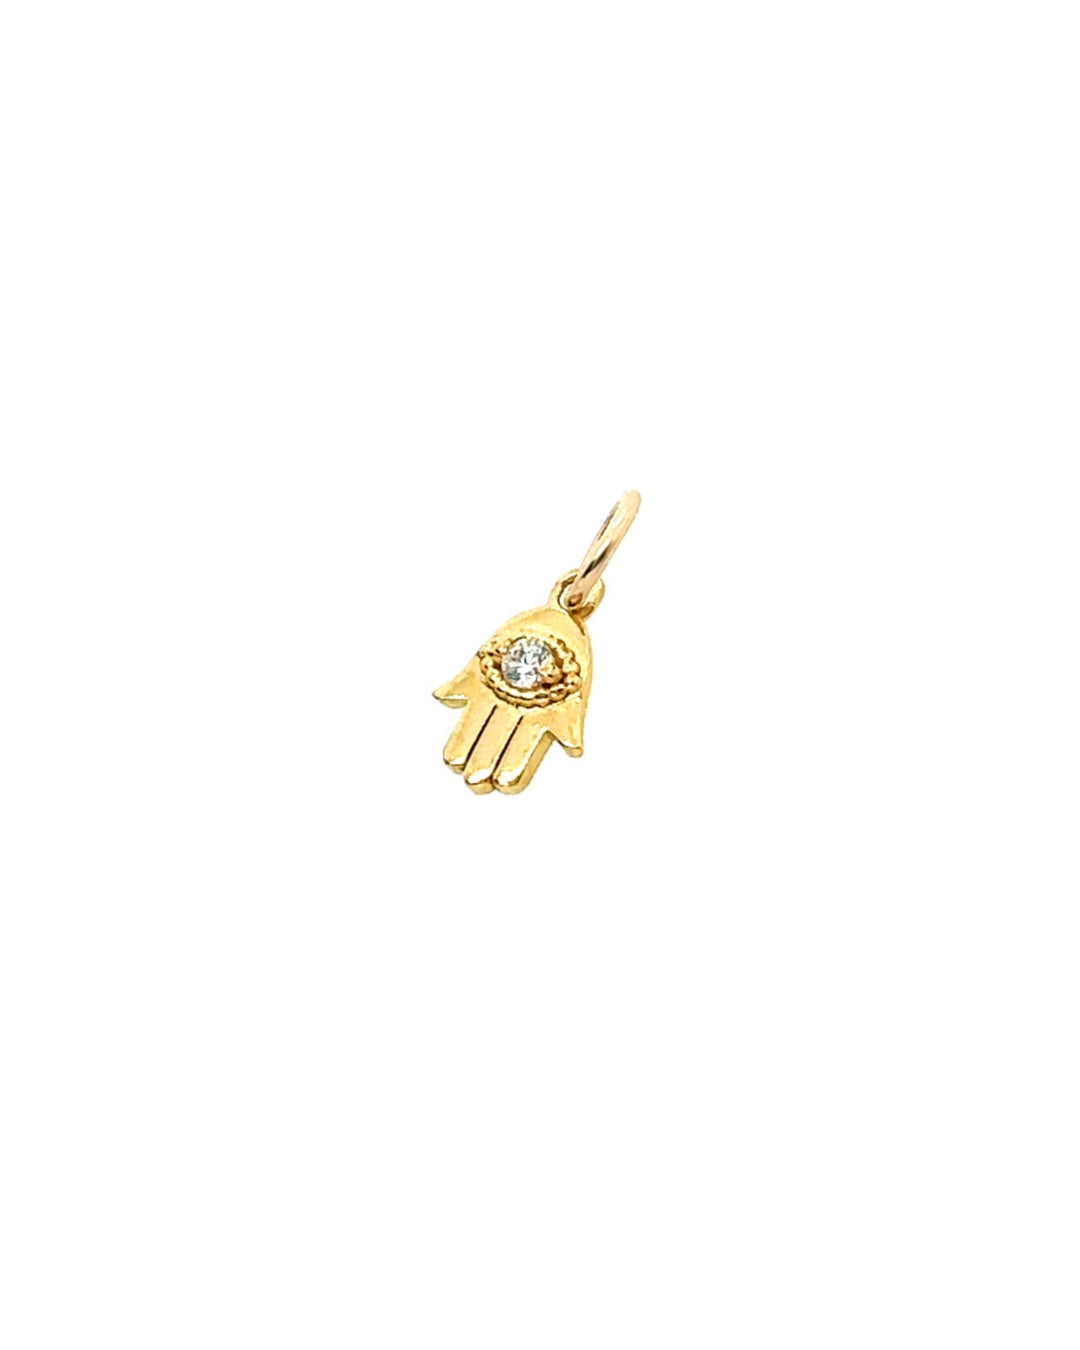 14k gold fill hamsa evil eye protection talisman necklace pendant charm